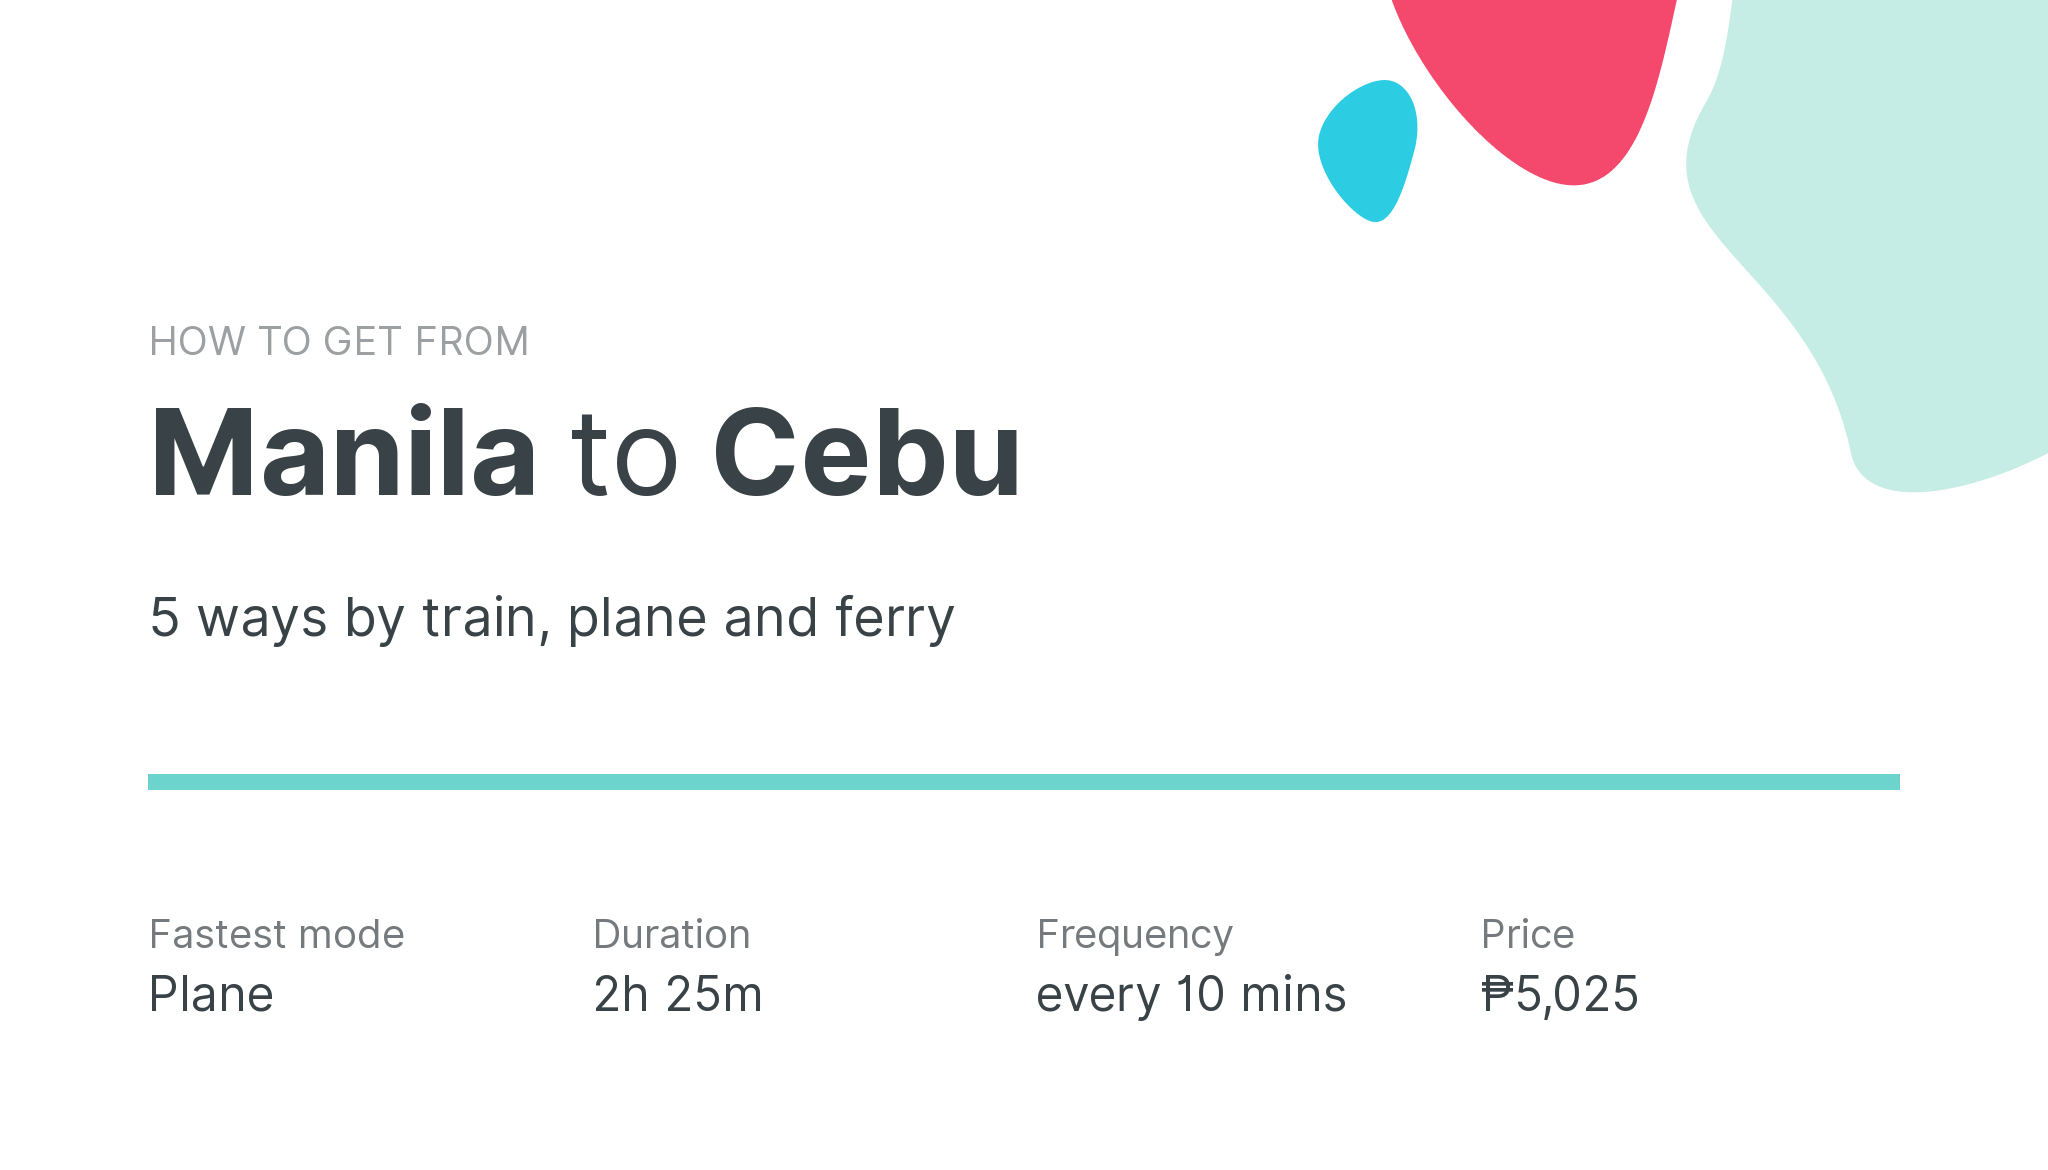 How do I get from Manila to Cebu